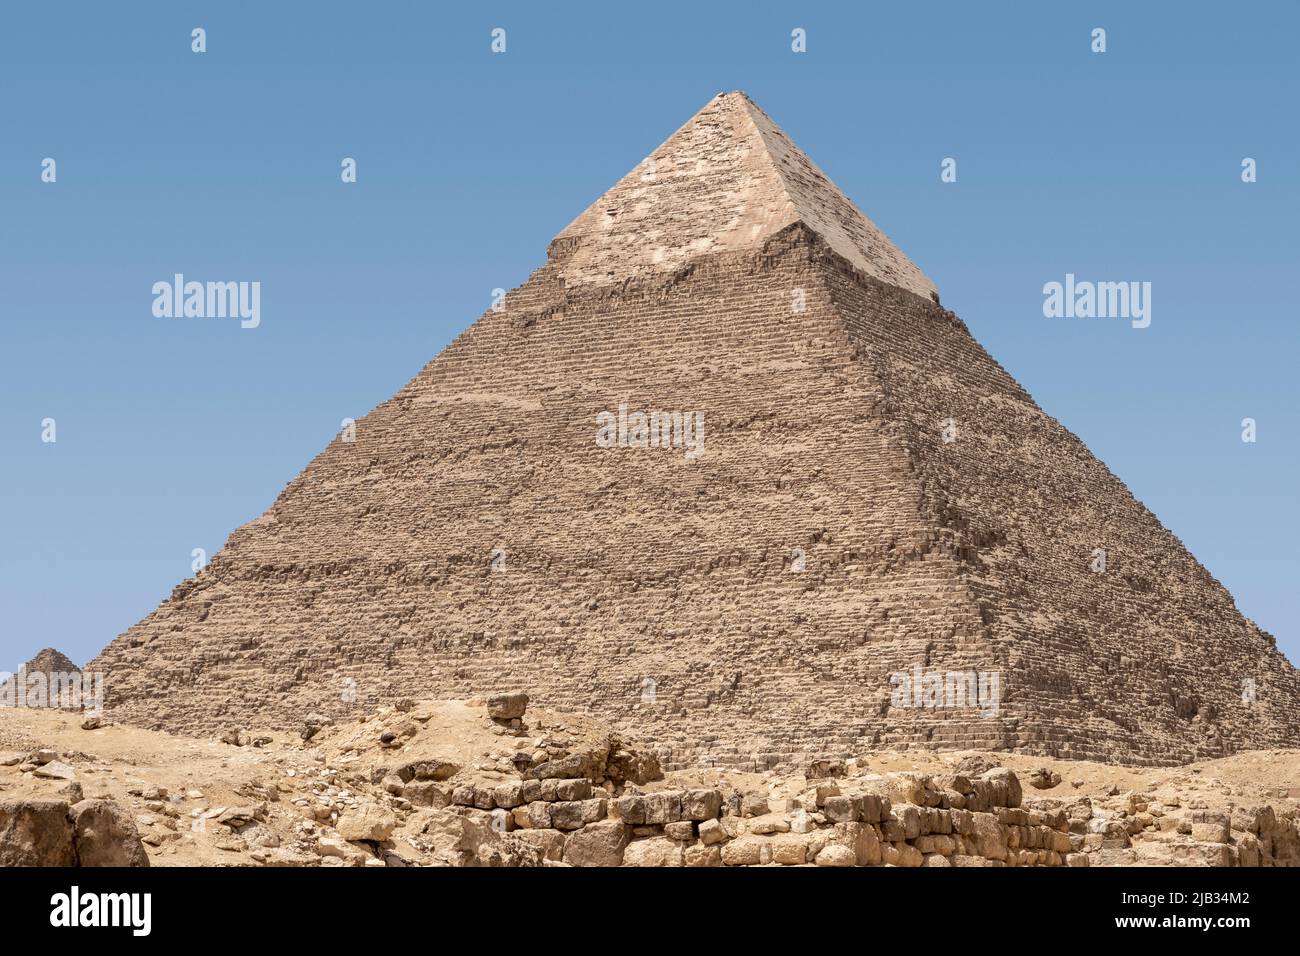 Pyramid of Khafre on the Giza plateau, the Great Pyramids of Giza, Cairo, Egypt Stock Photo